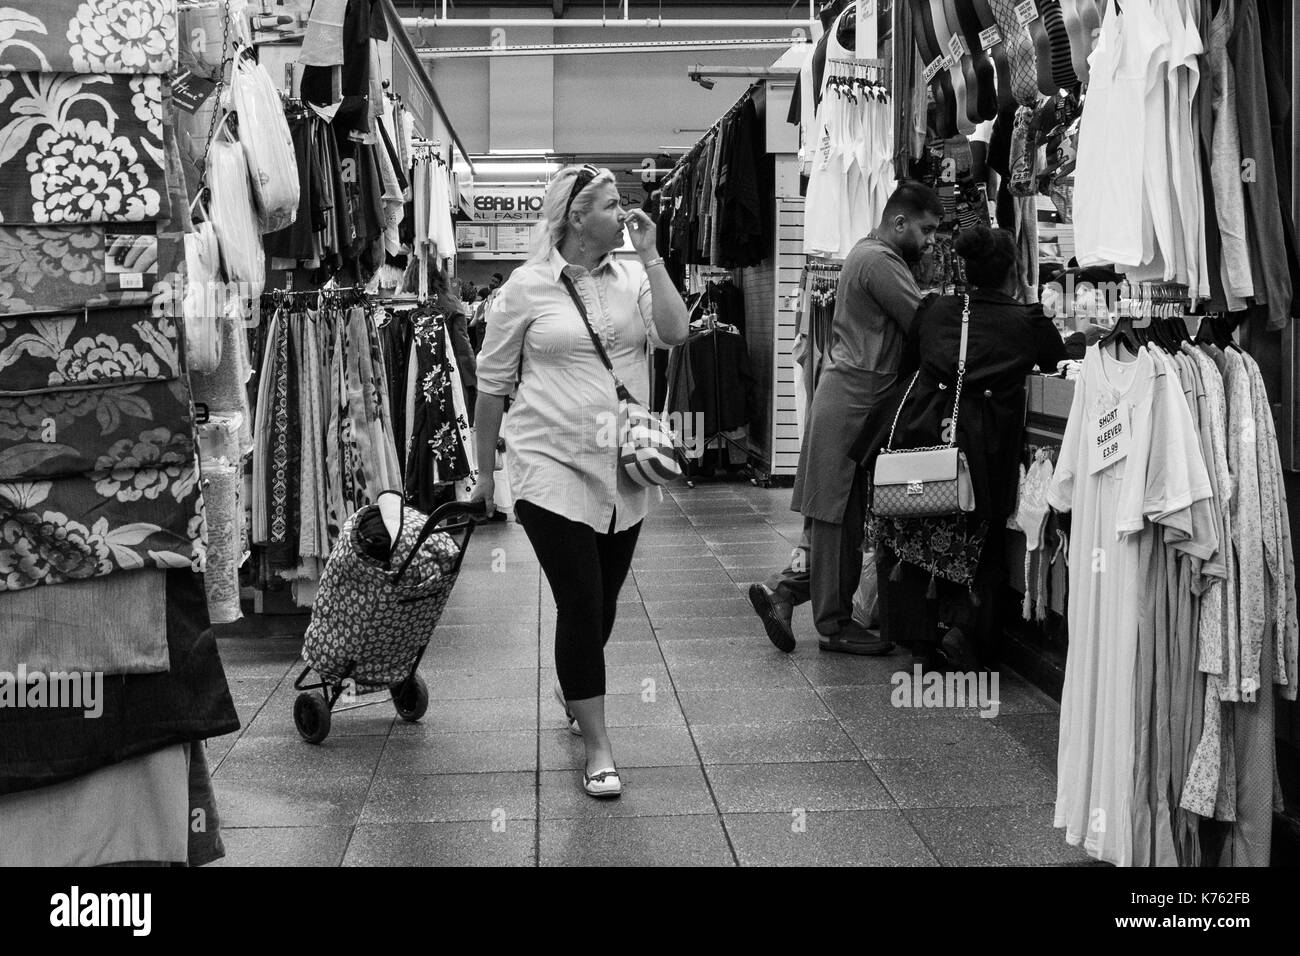 Bradford city centre Black and White Stock Photos & Images - Alamy